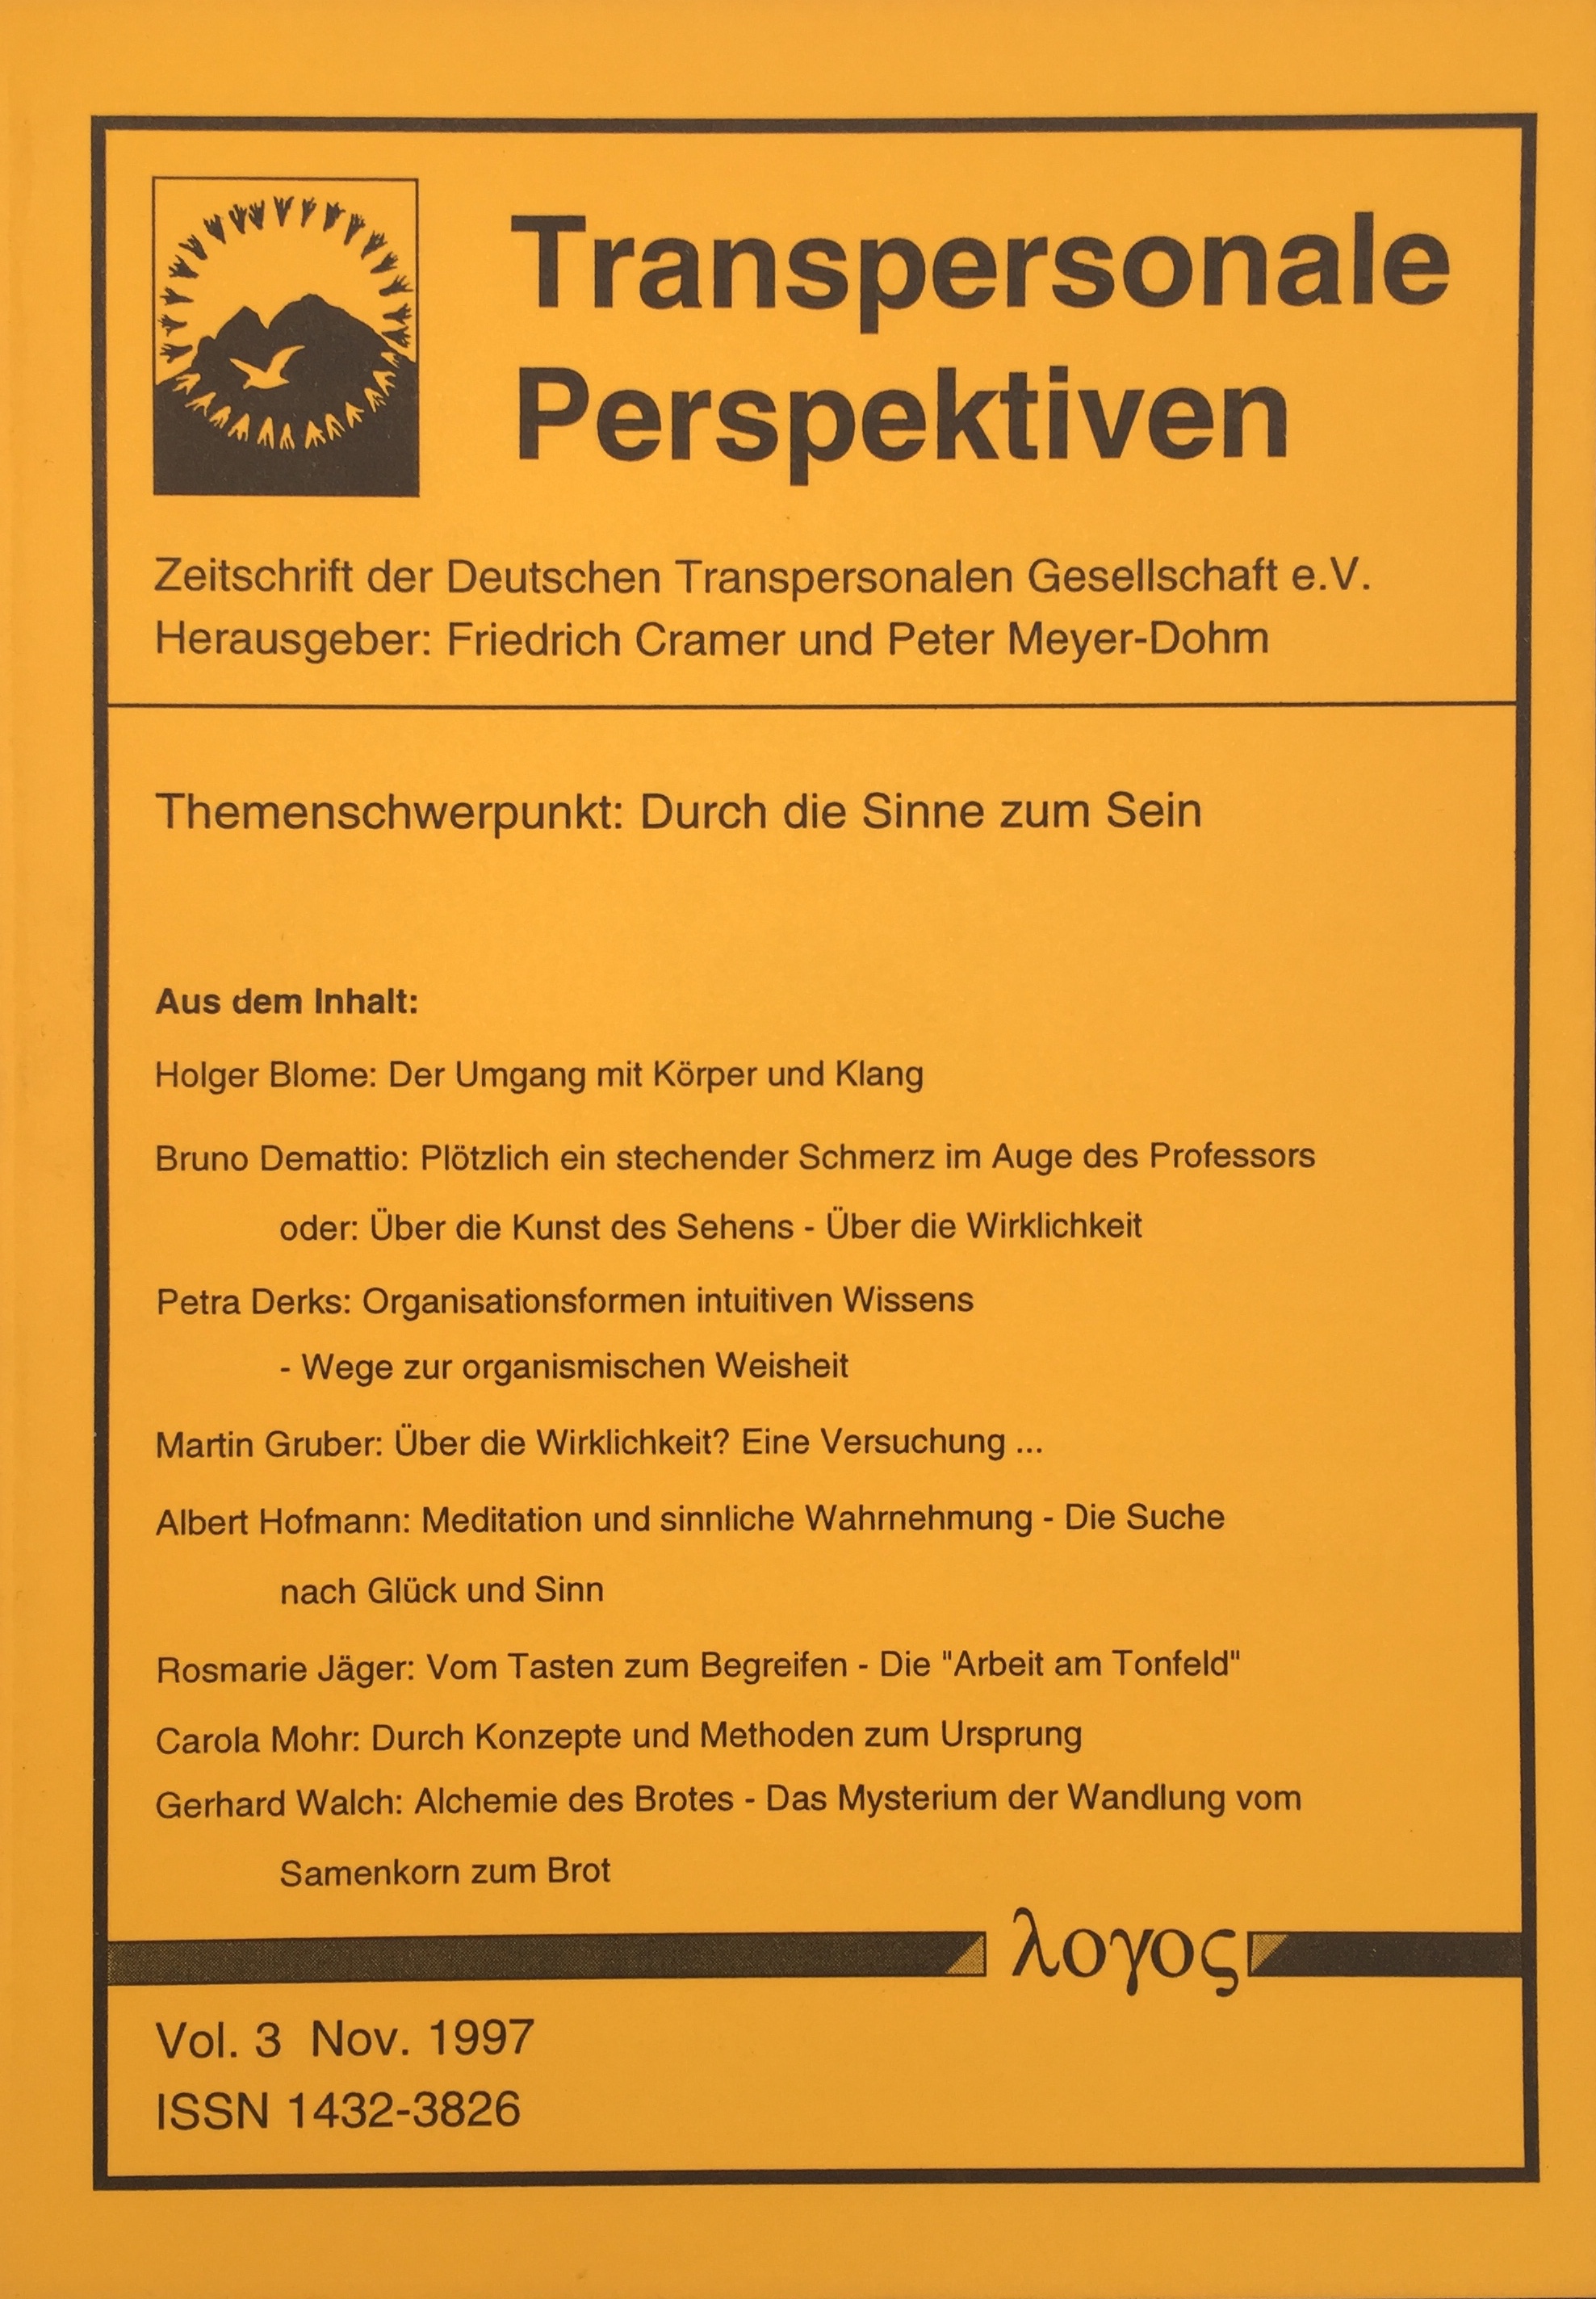 Transpersonale Perspektiven Volume 3/1997